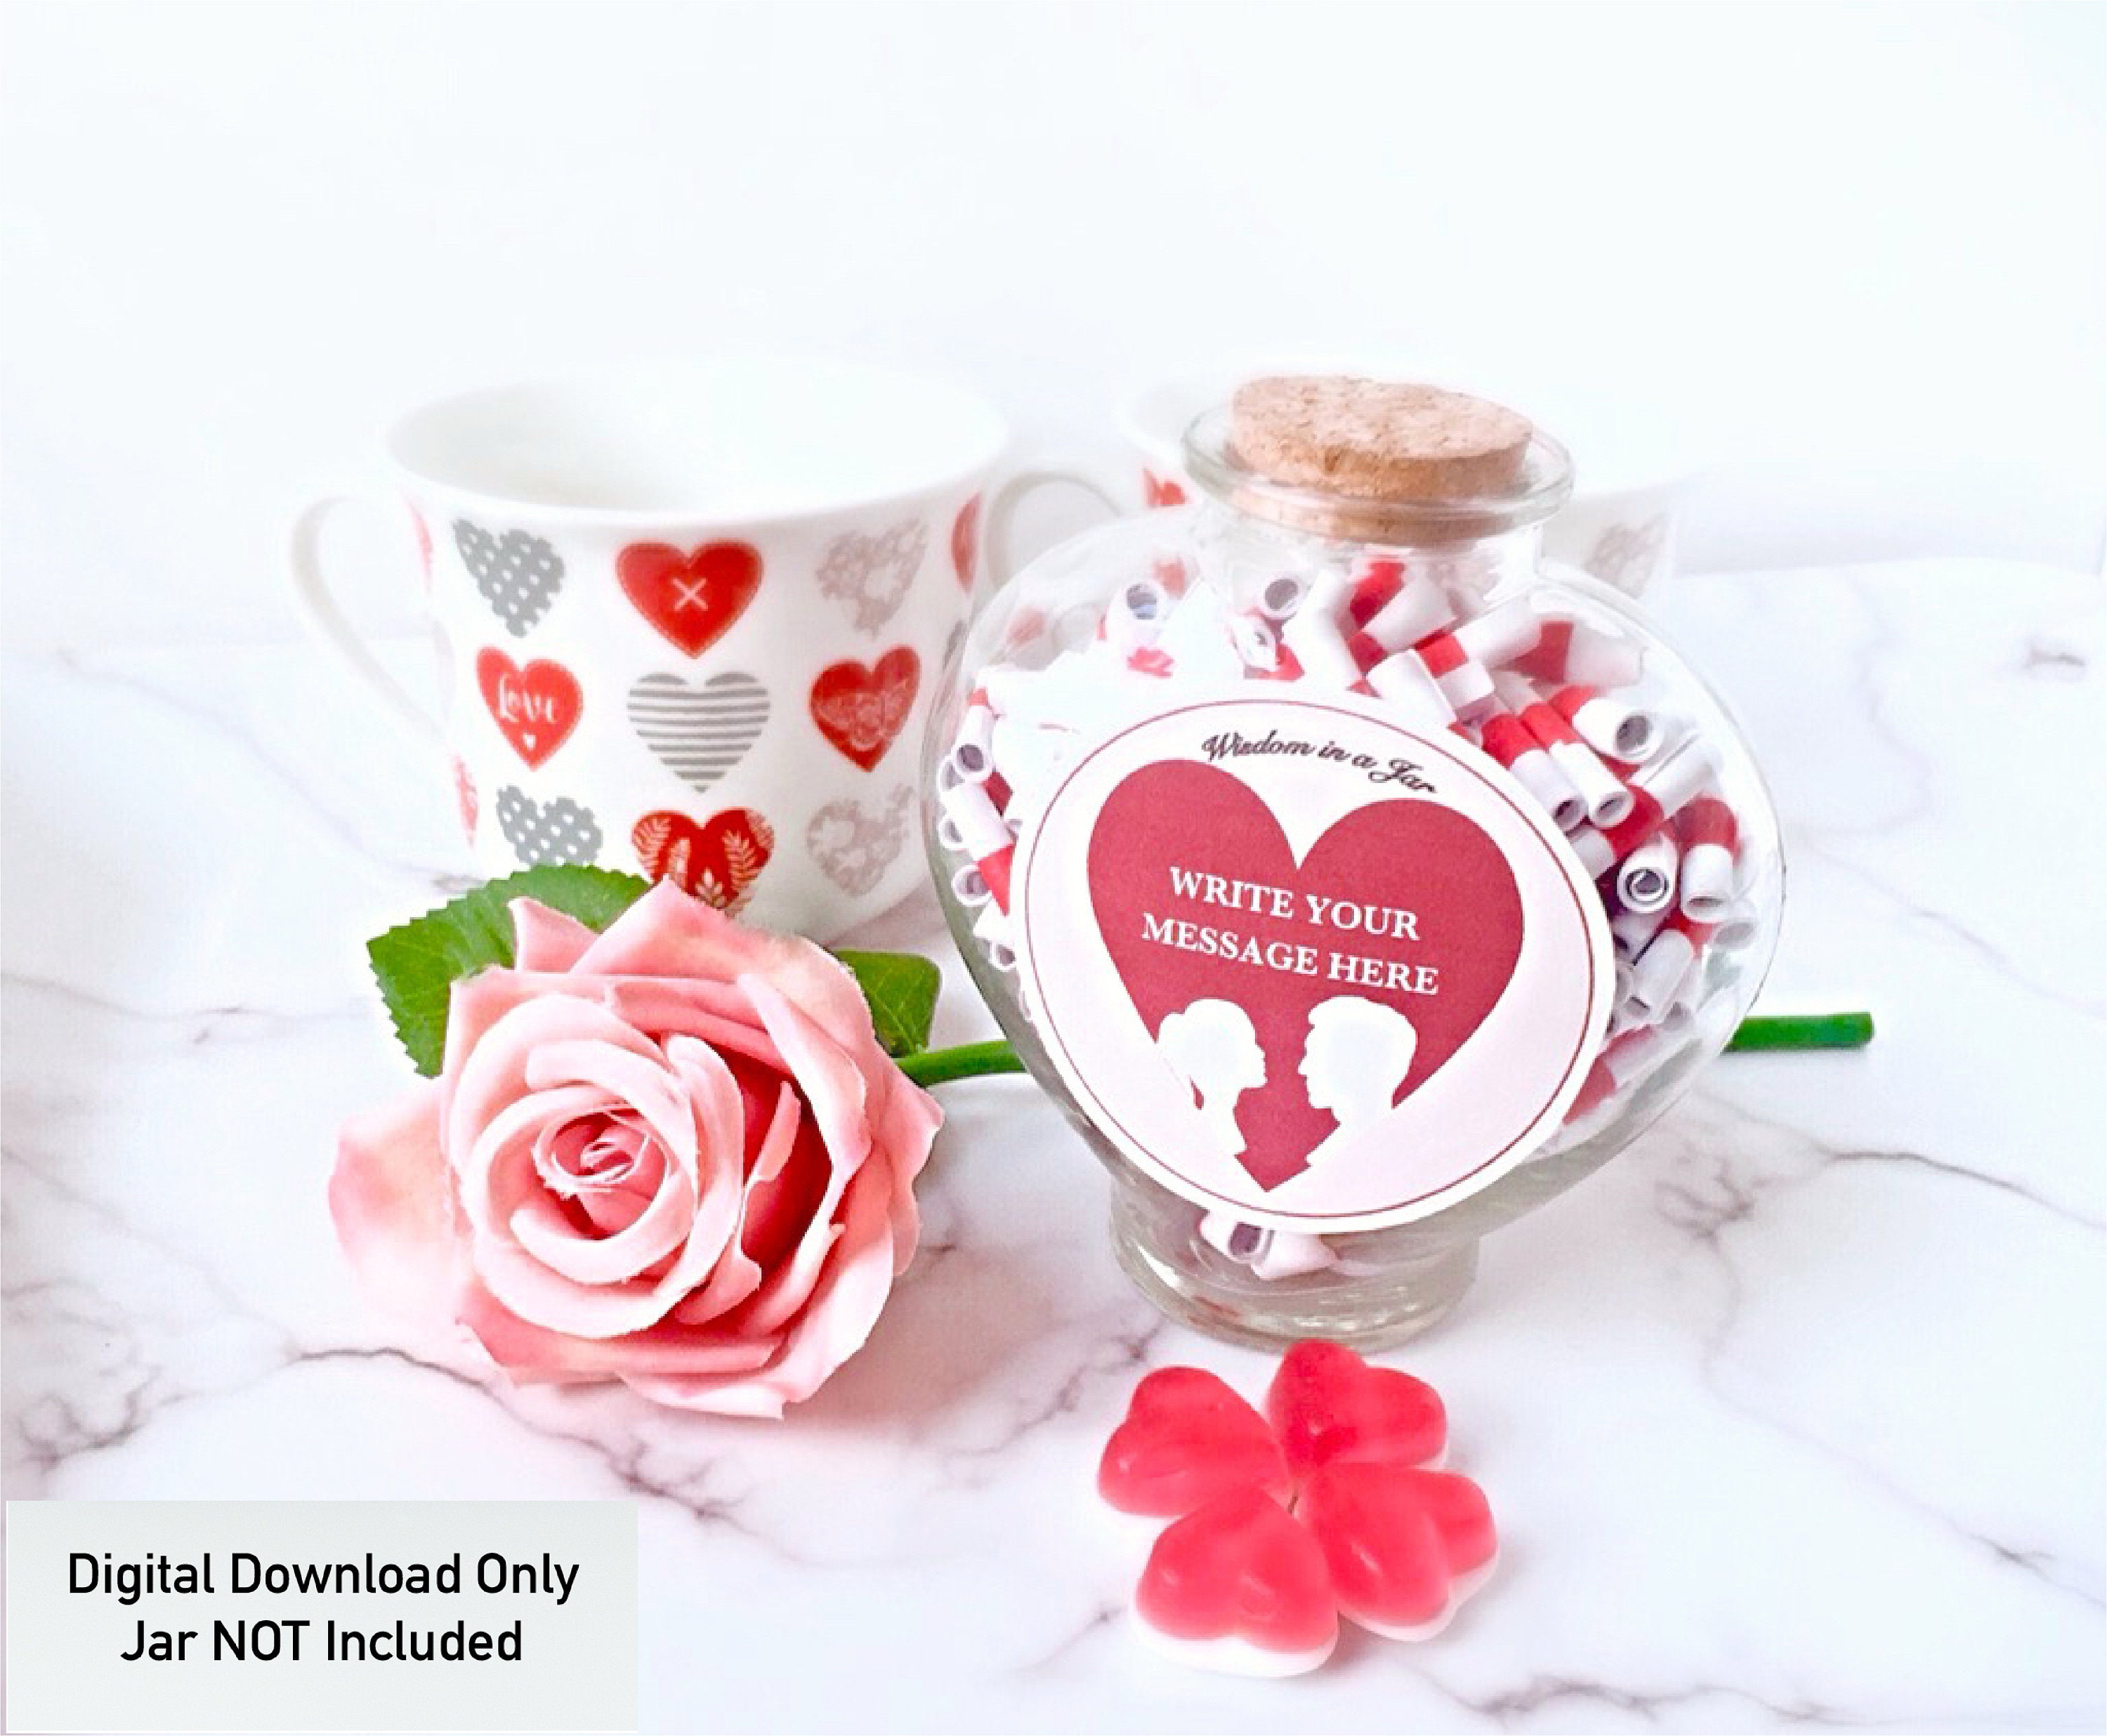 50+ DIY Romantic Valentine's Day Ideas for Him